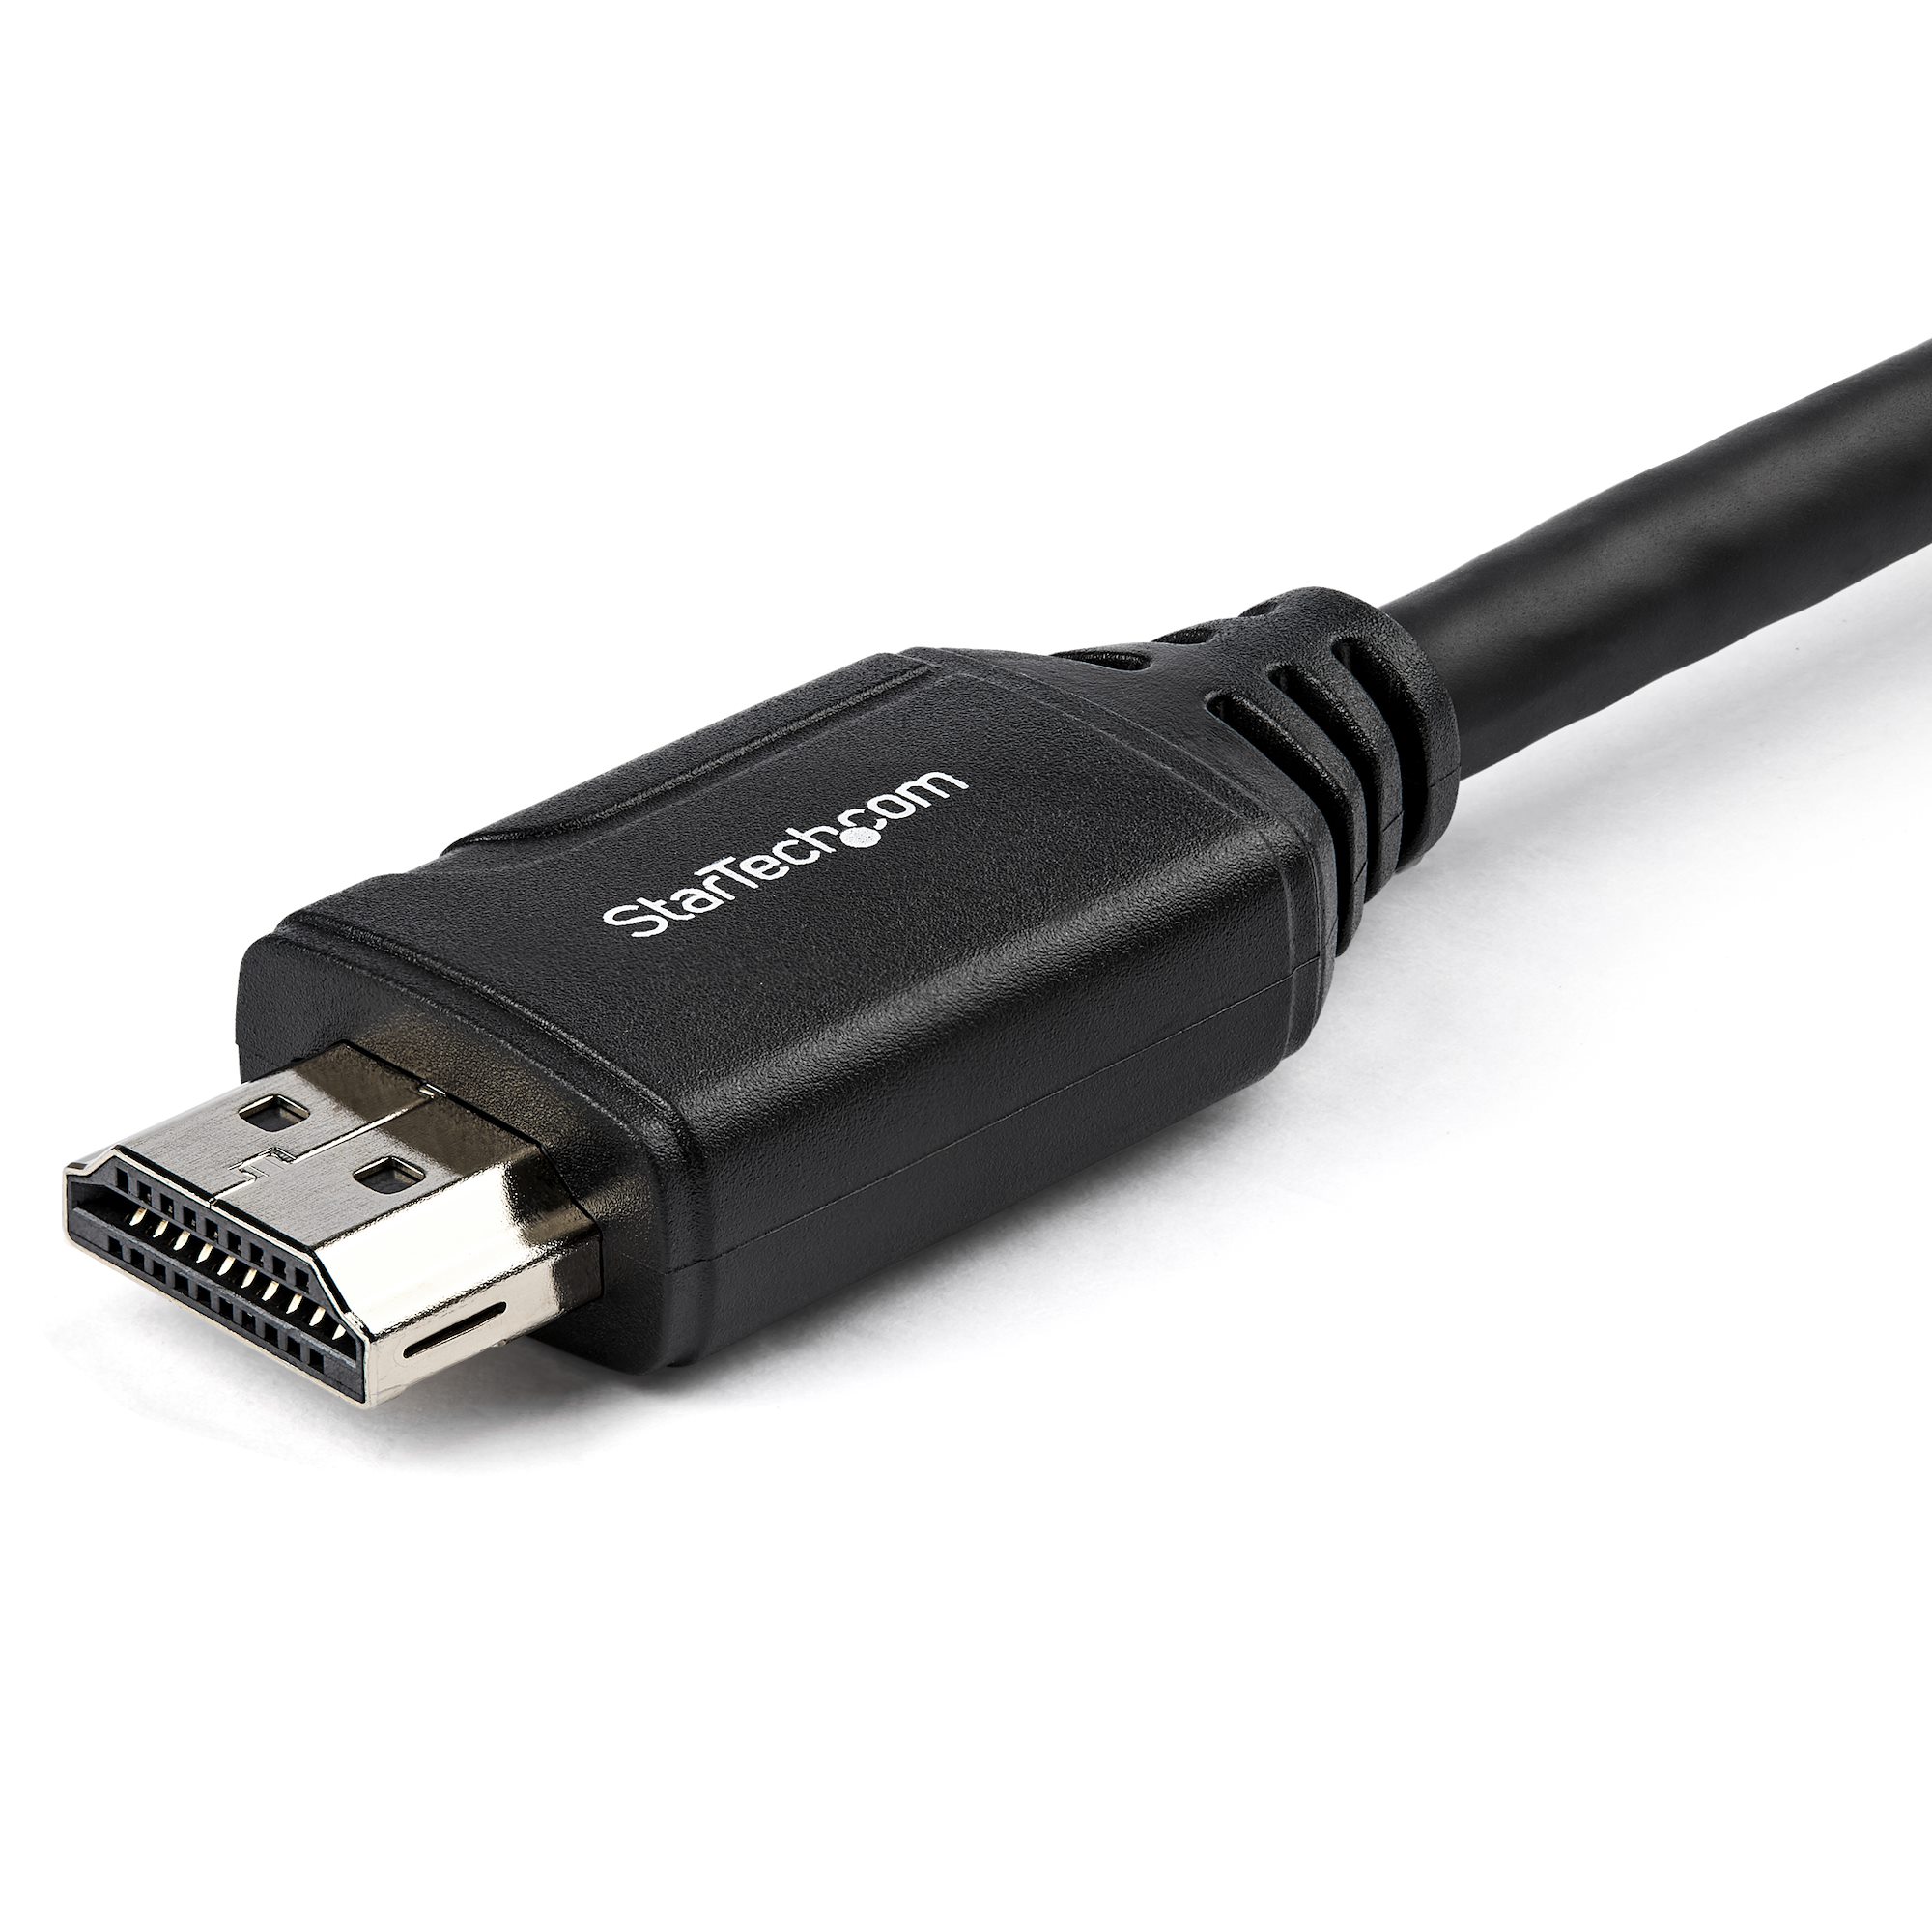 Kabel - HDMI 2.0 Portsaver - 15 cm - HDMI® Kabel & HDMI Adapter